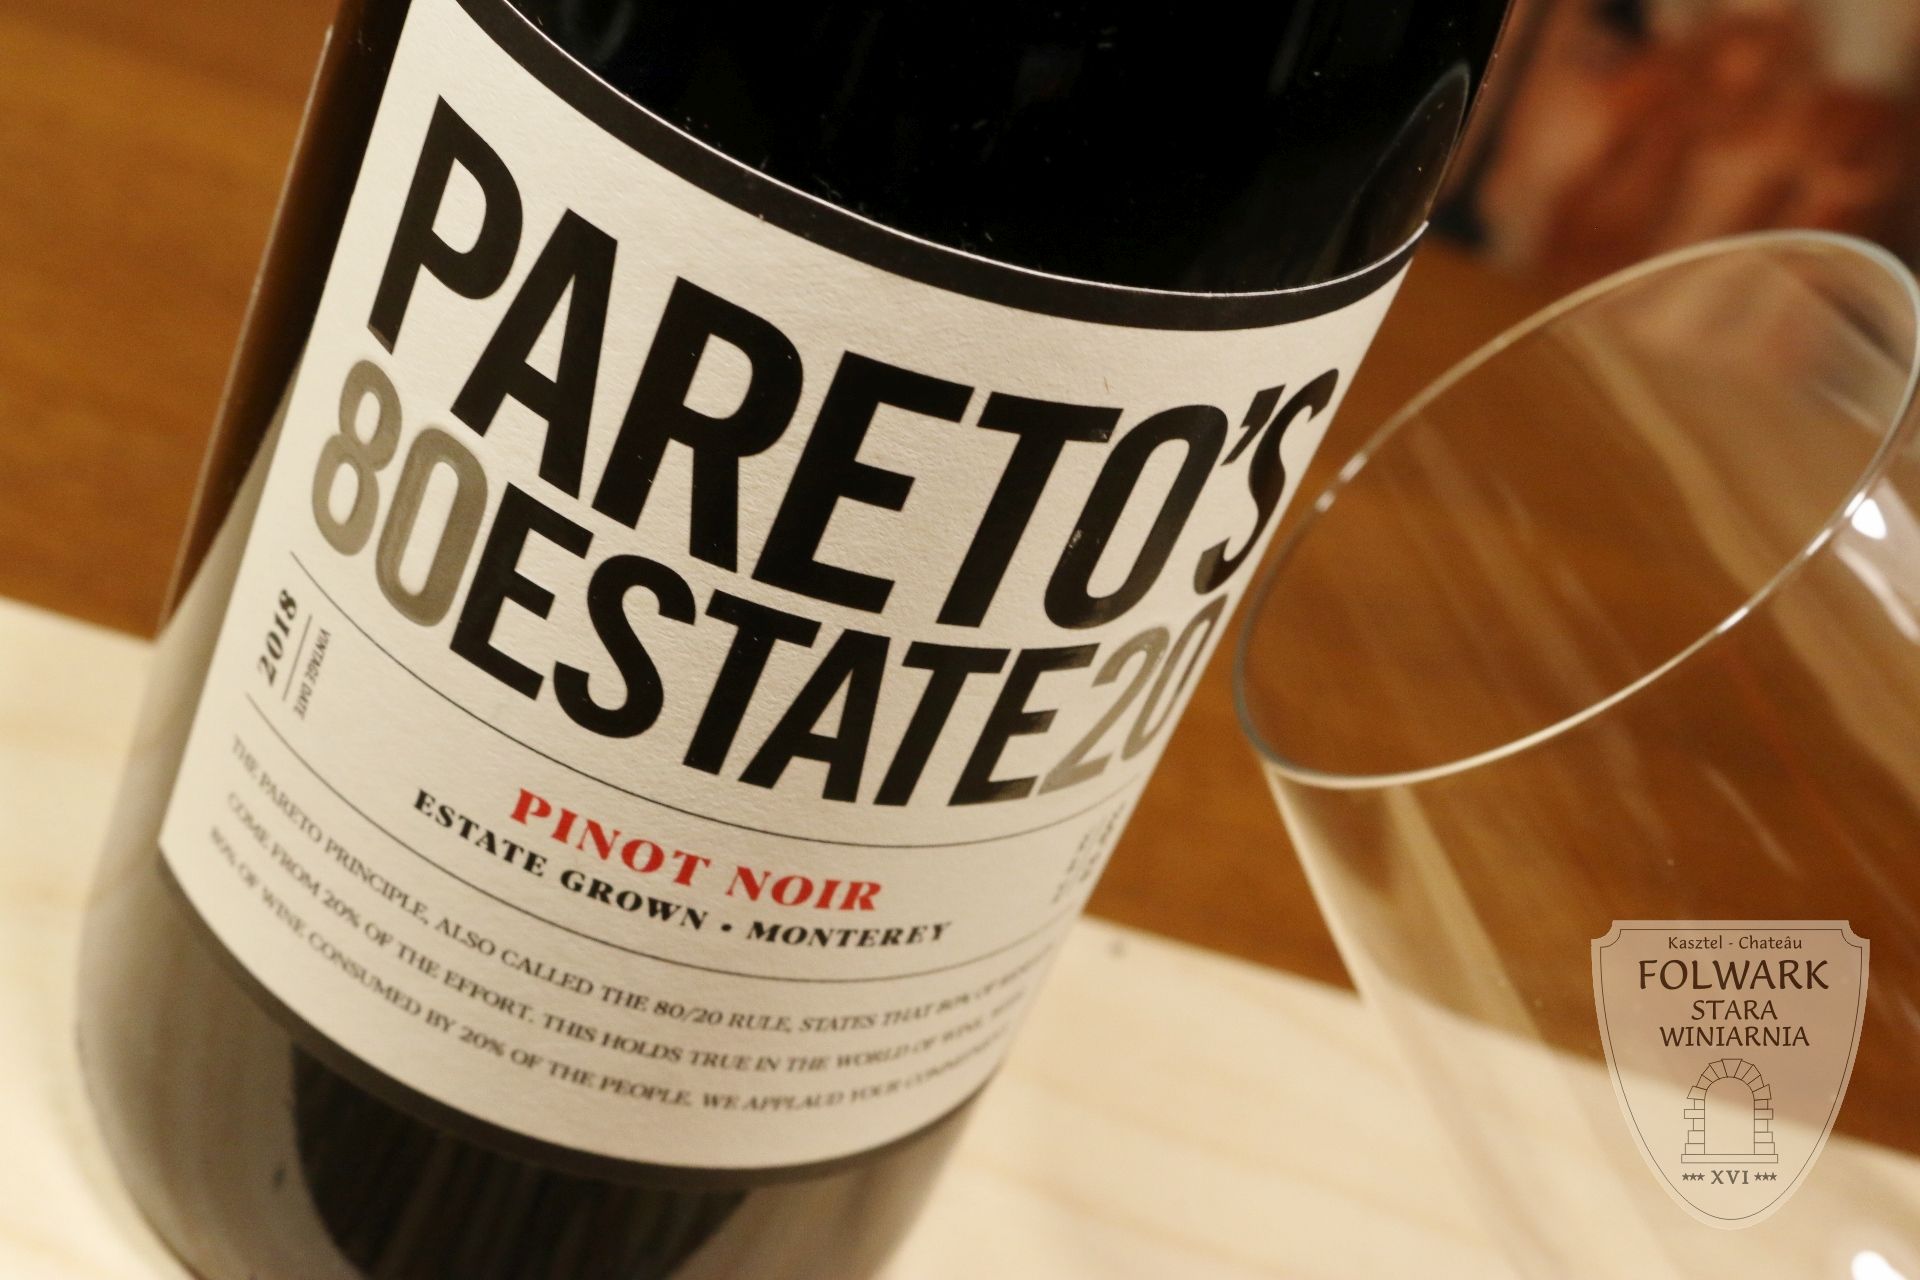 Pareto's Pinot Noir - Folwark Stara Winiarnia poleca wina z Kalifornii